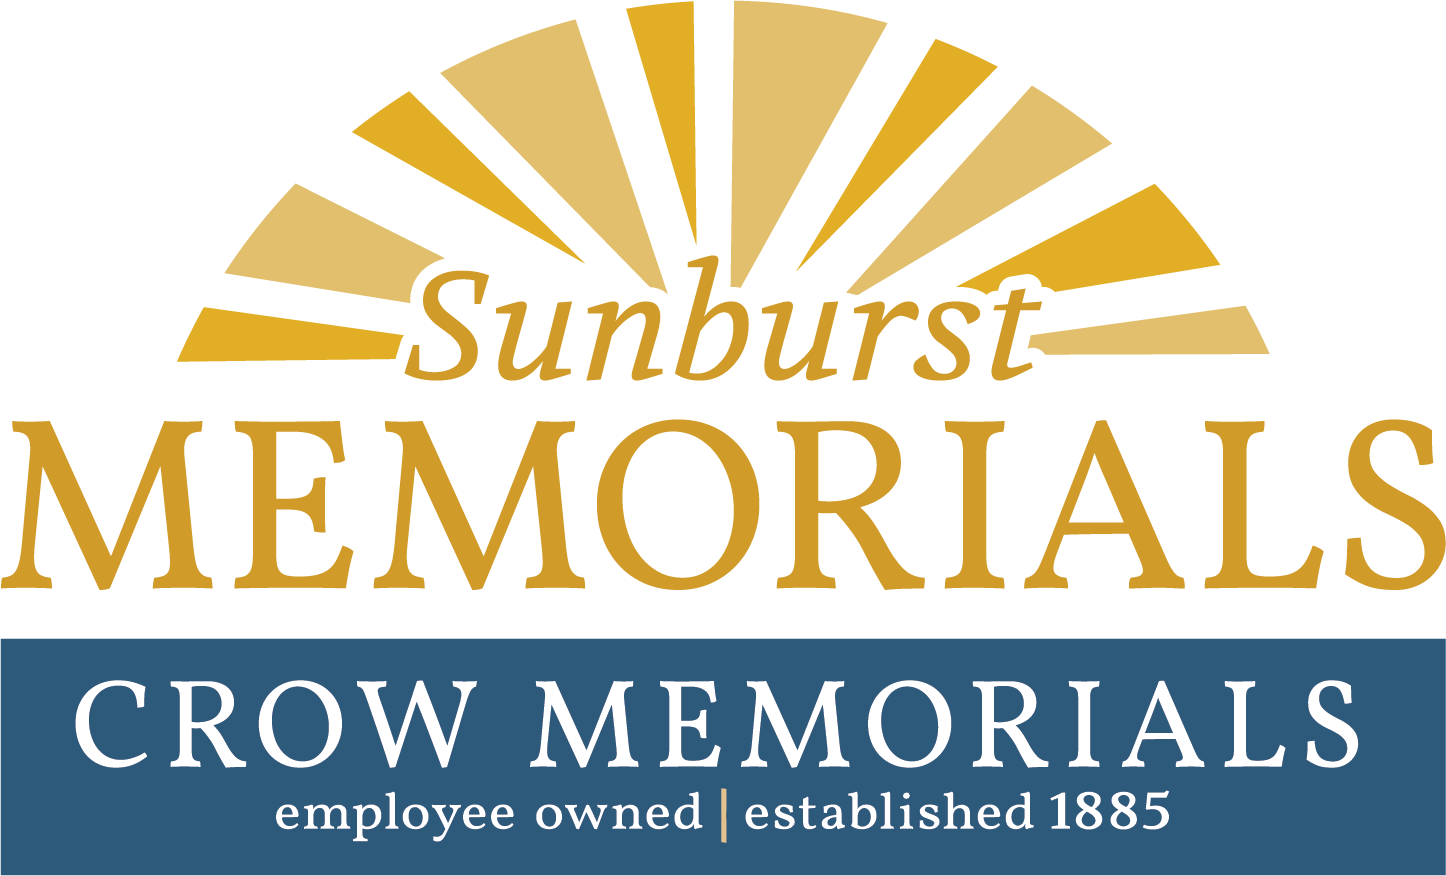 Crow Memorials logo